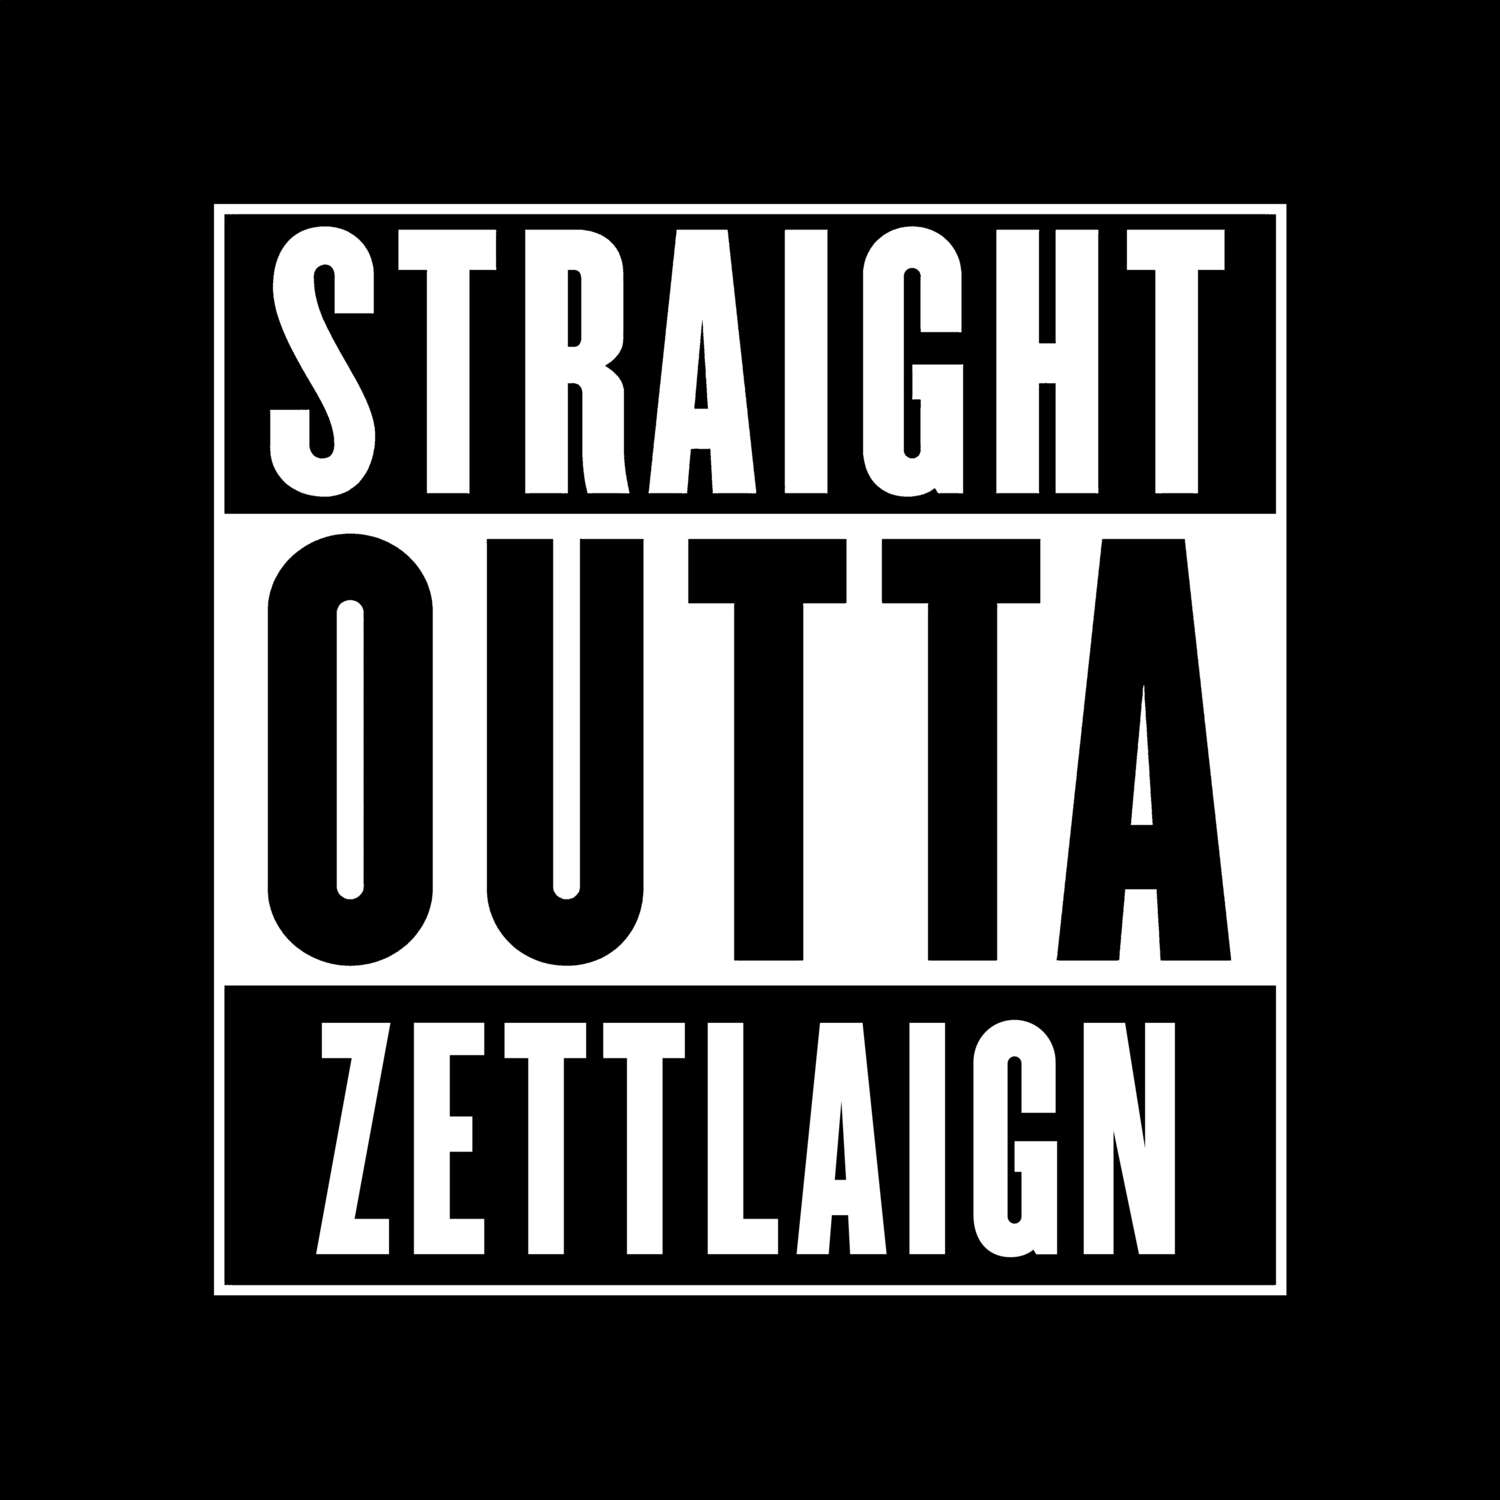 Zettlaign T-Shirt »Straight Outta«